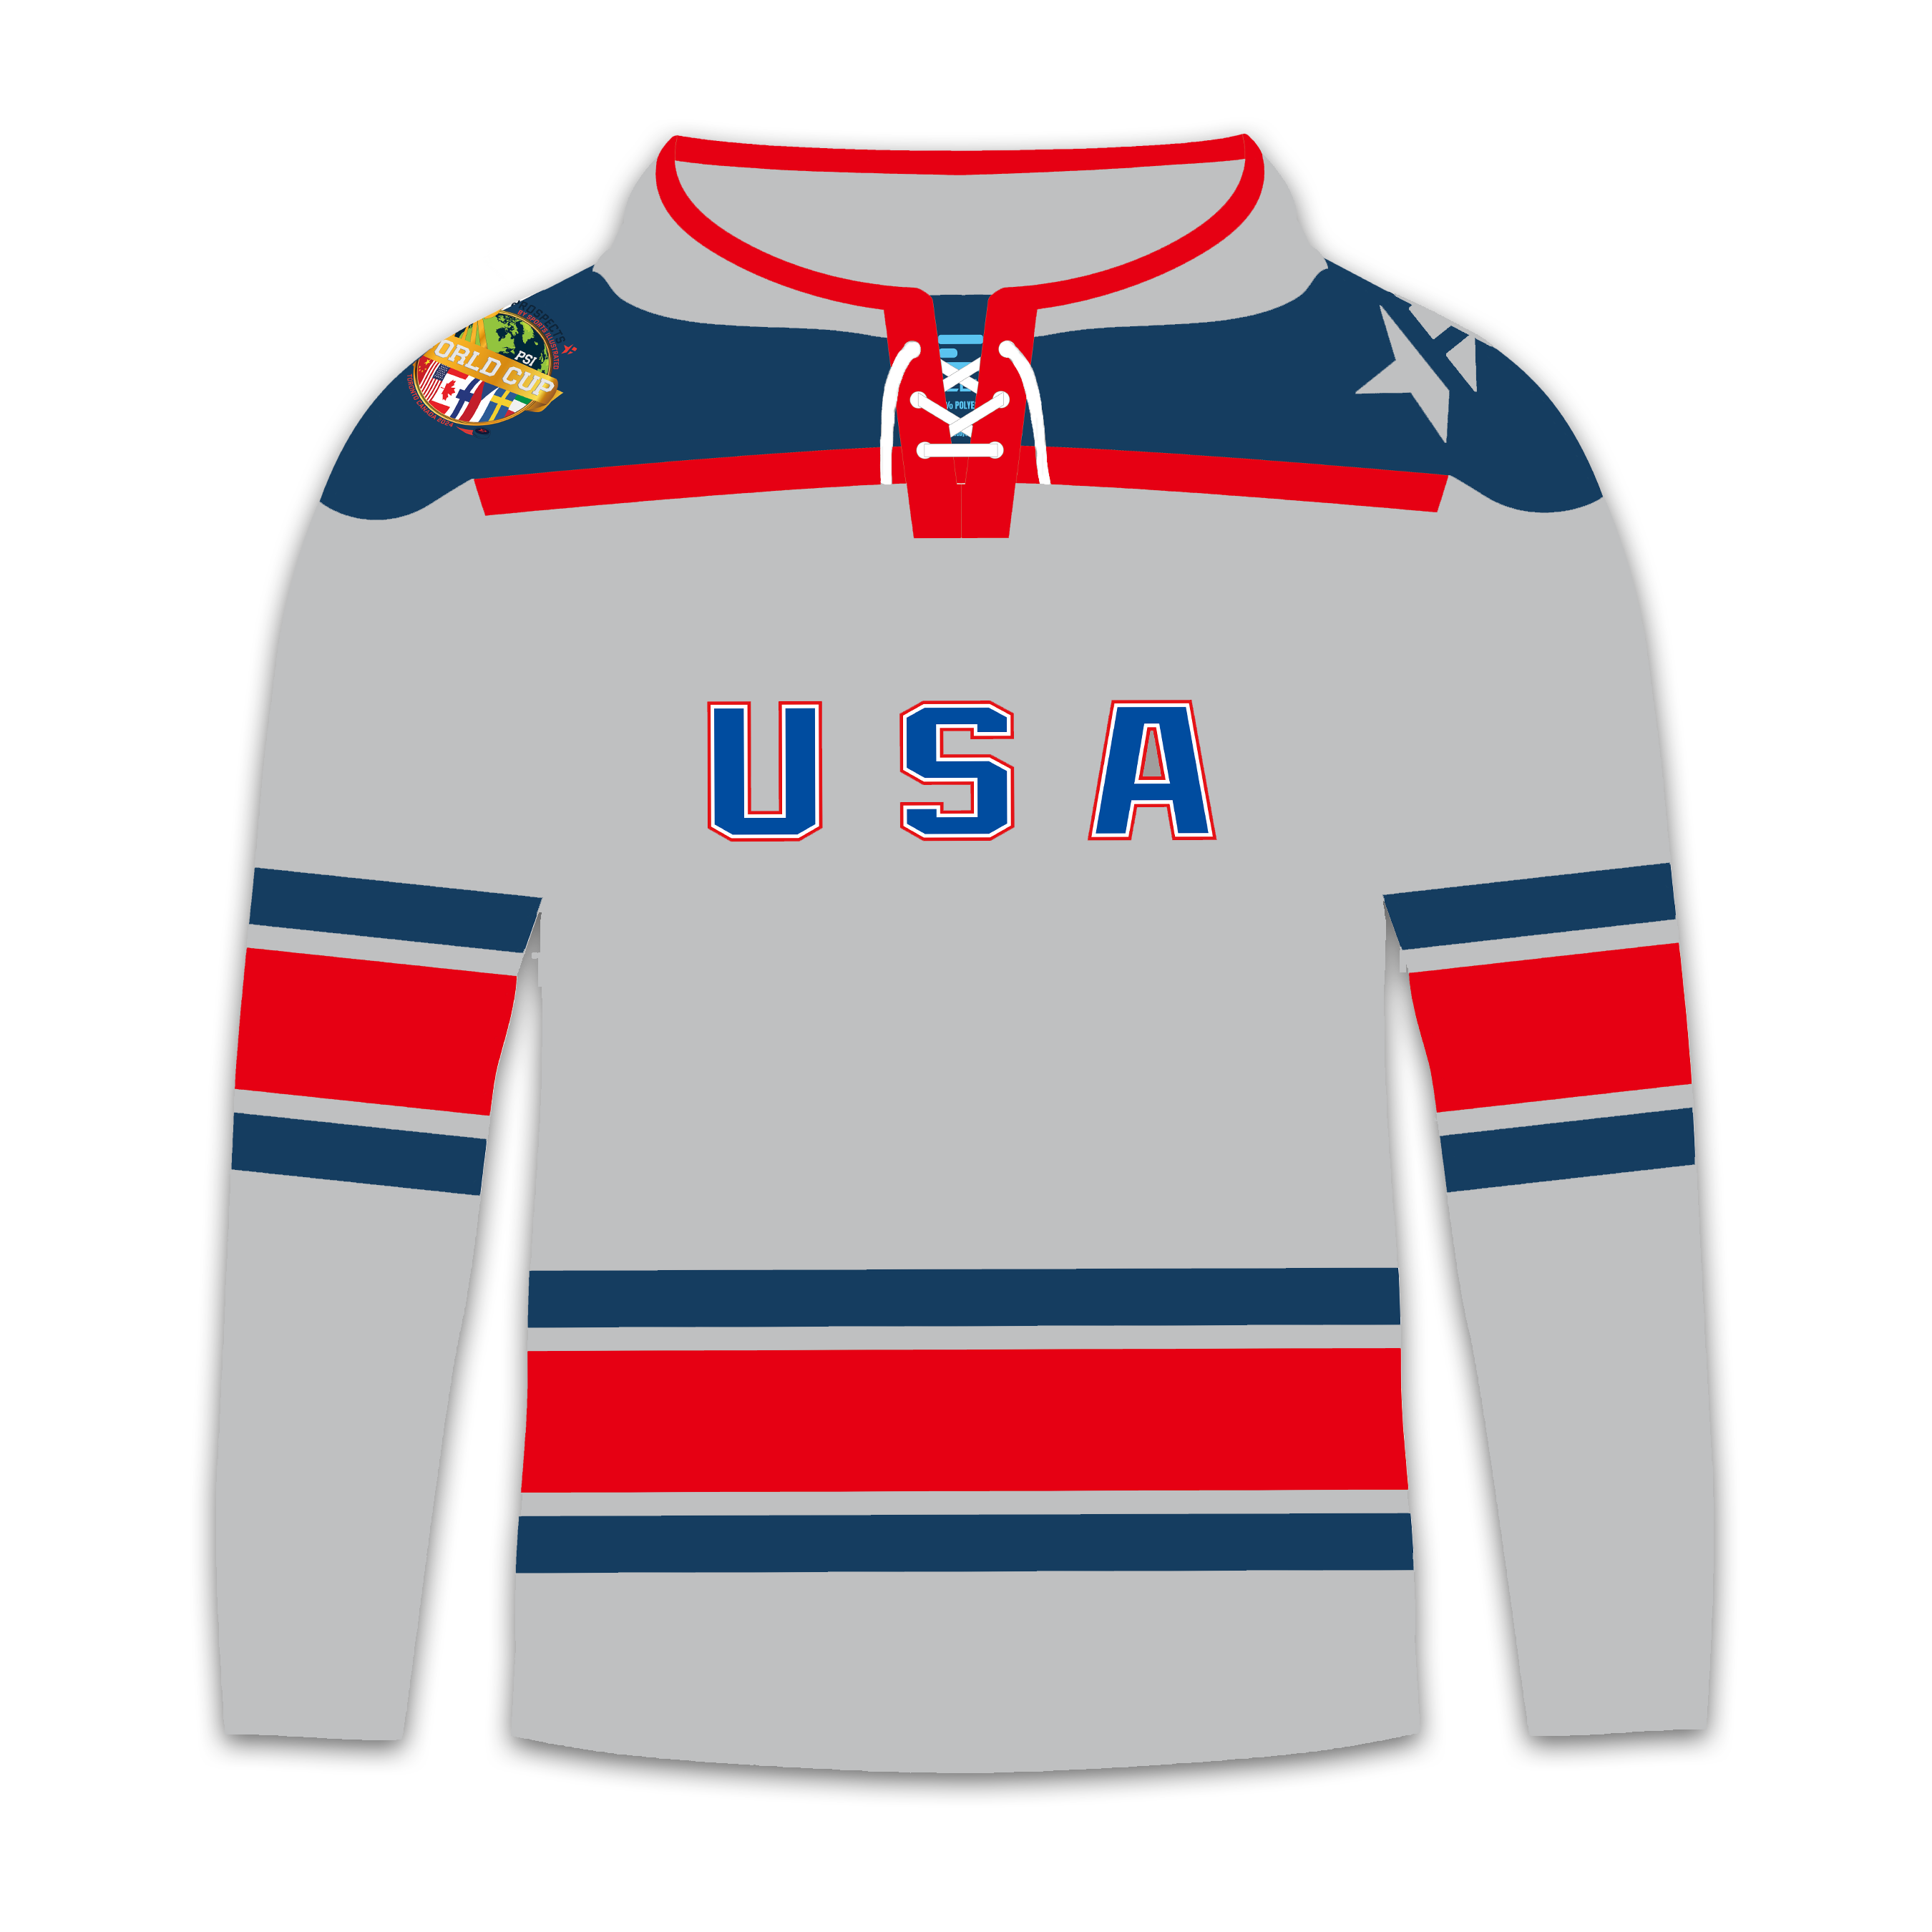 USA Silver World Cup Team Bundle